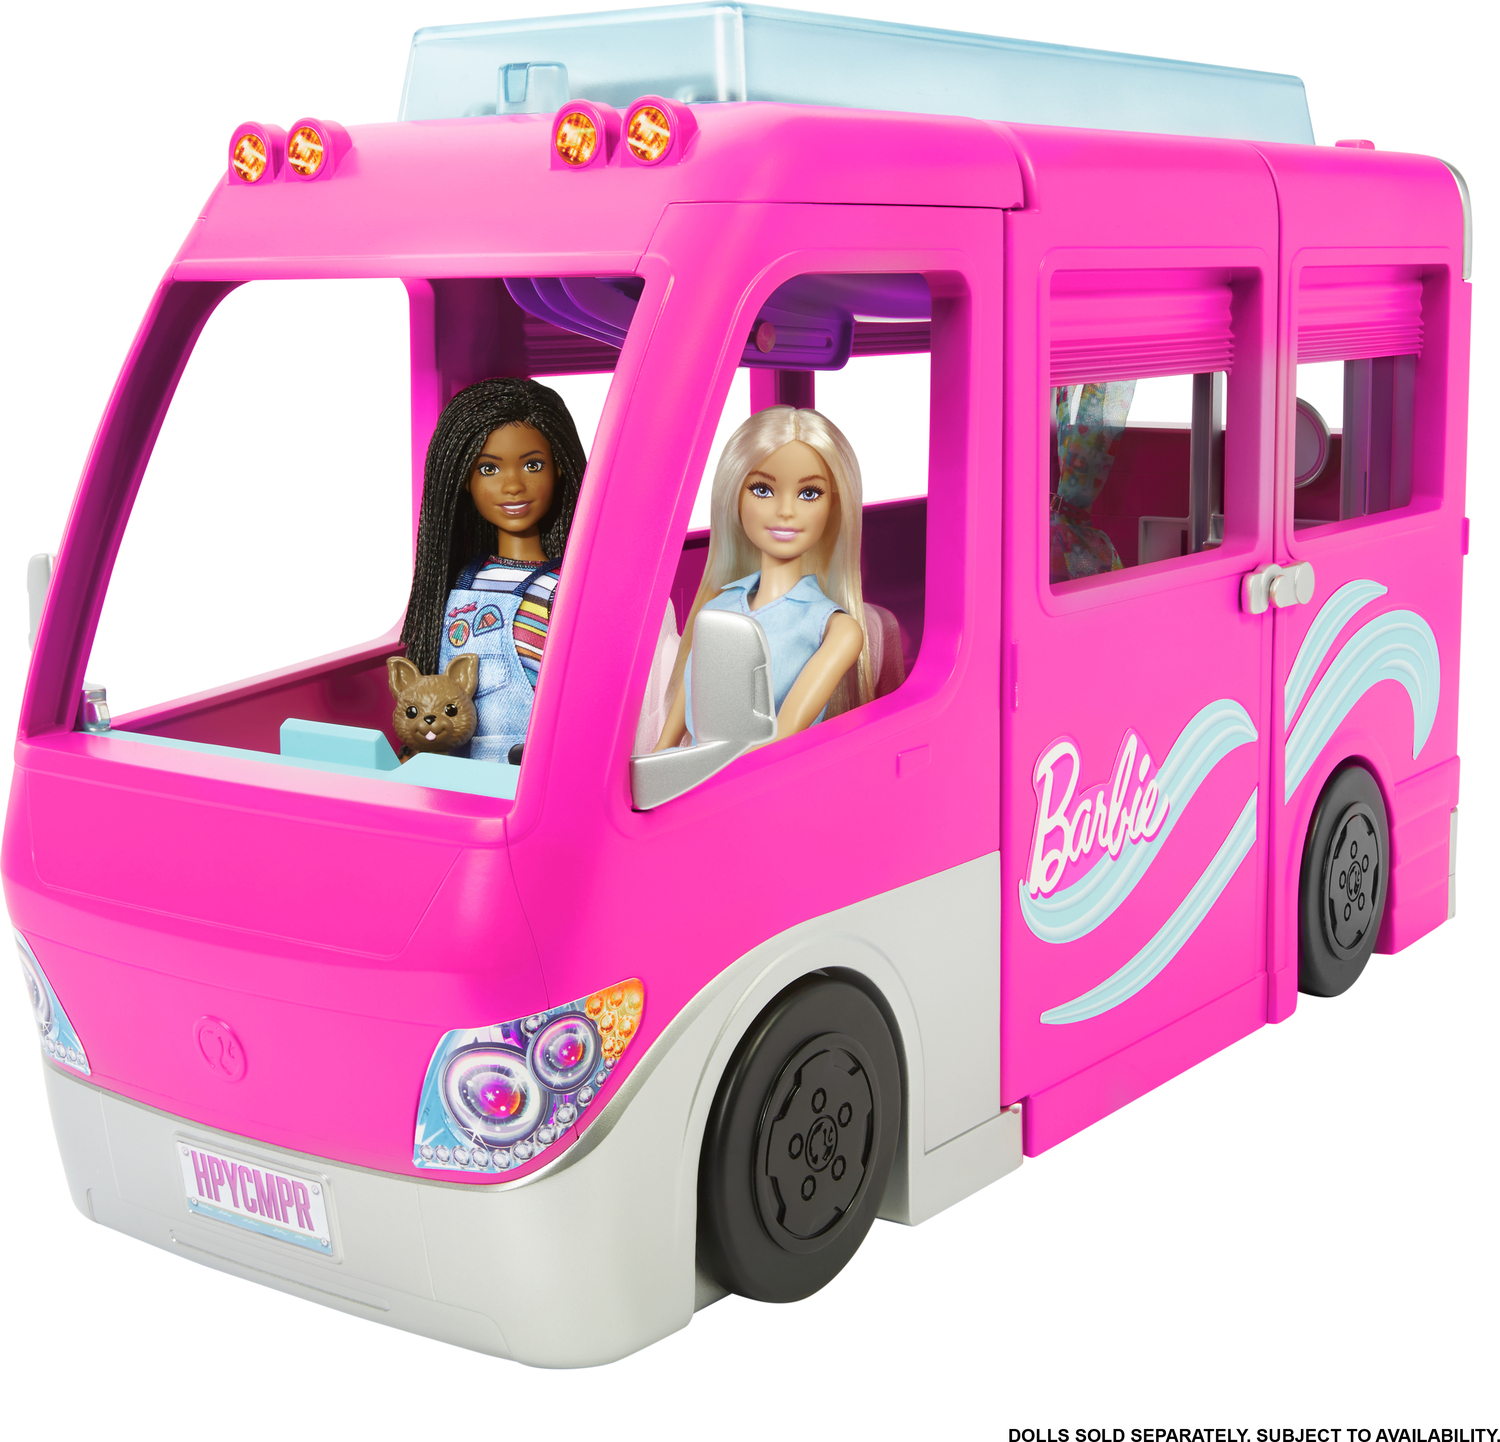 ler gård Dokument Barbie Dream Camper Vehicle Playset - The Toy Box Hanover